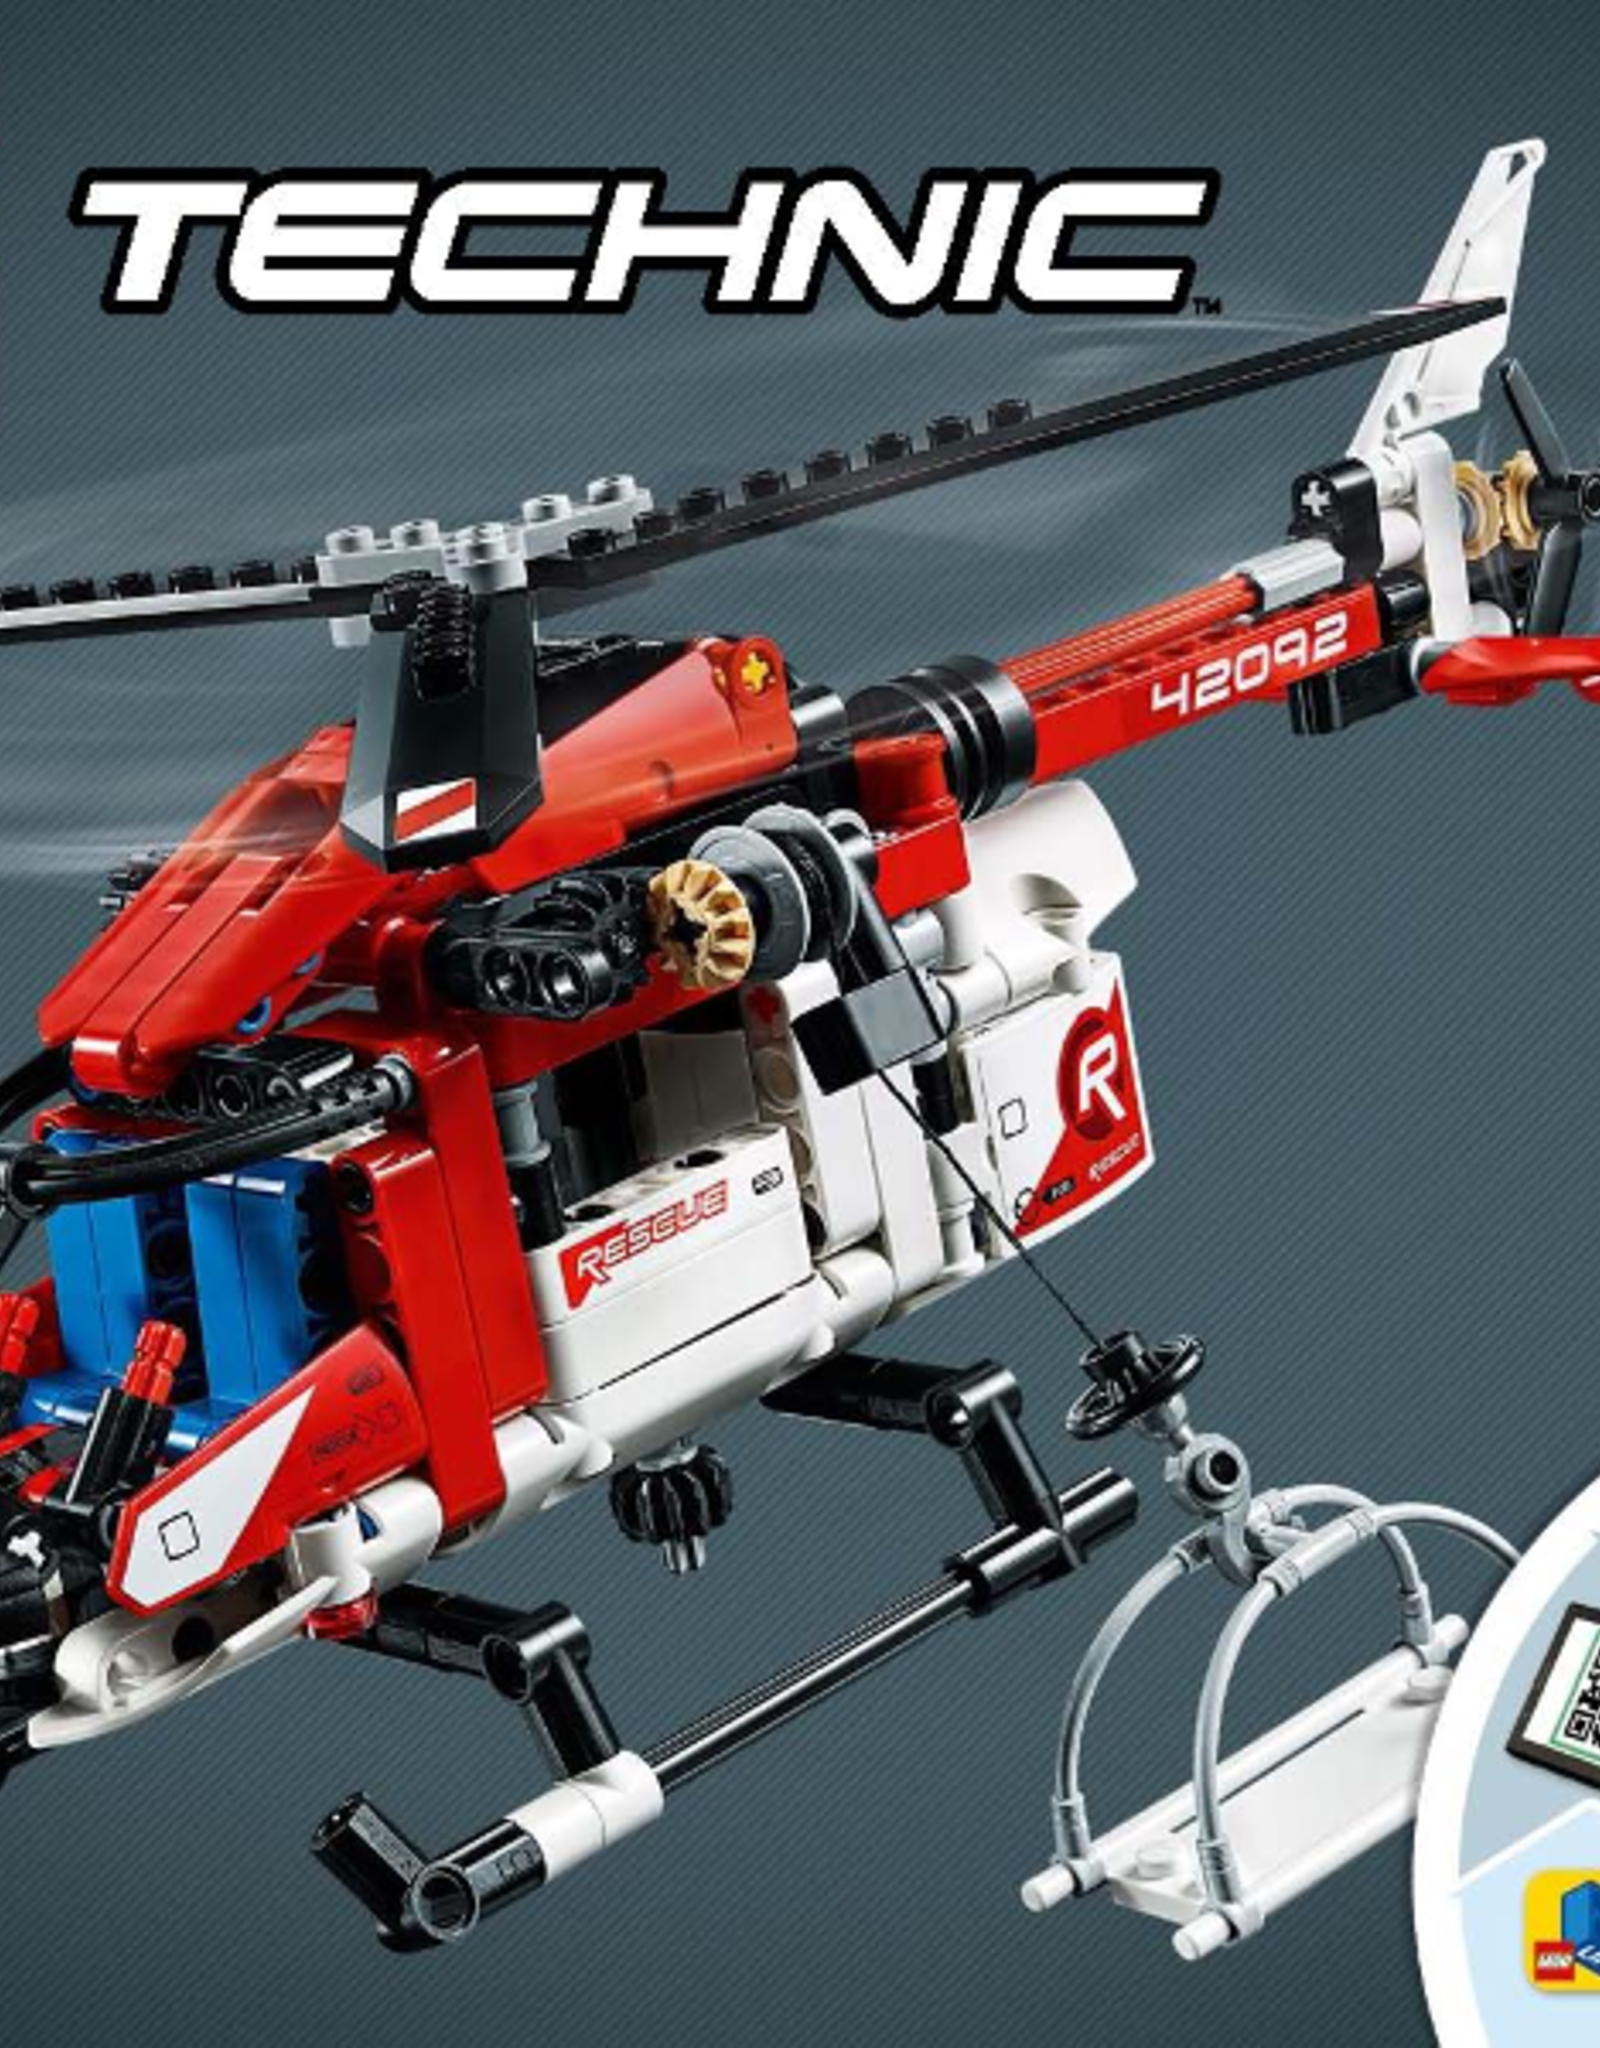 LEGO LEGO 42092 Rescue Helicopter TECHNIC